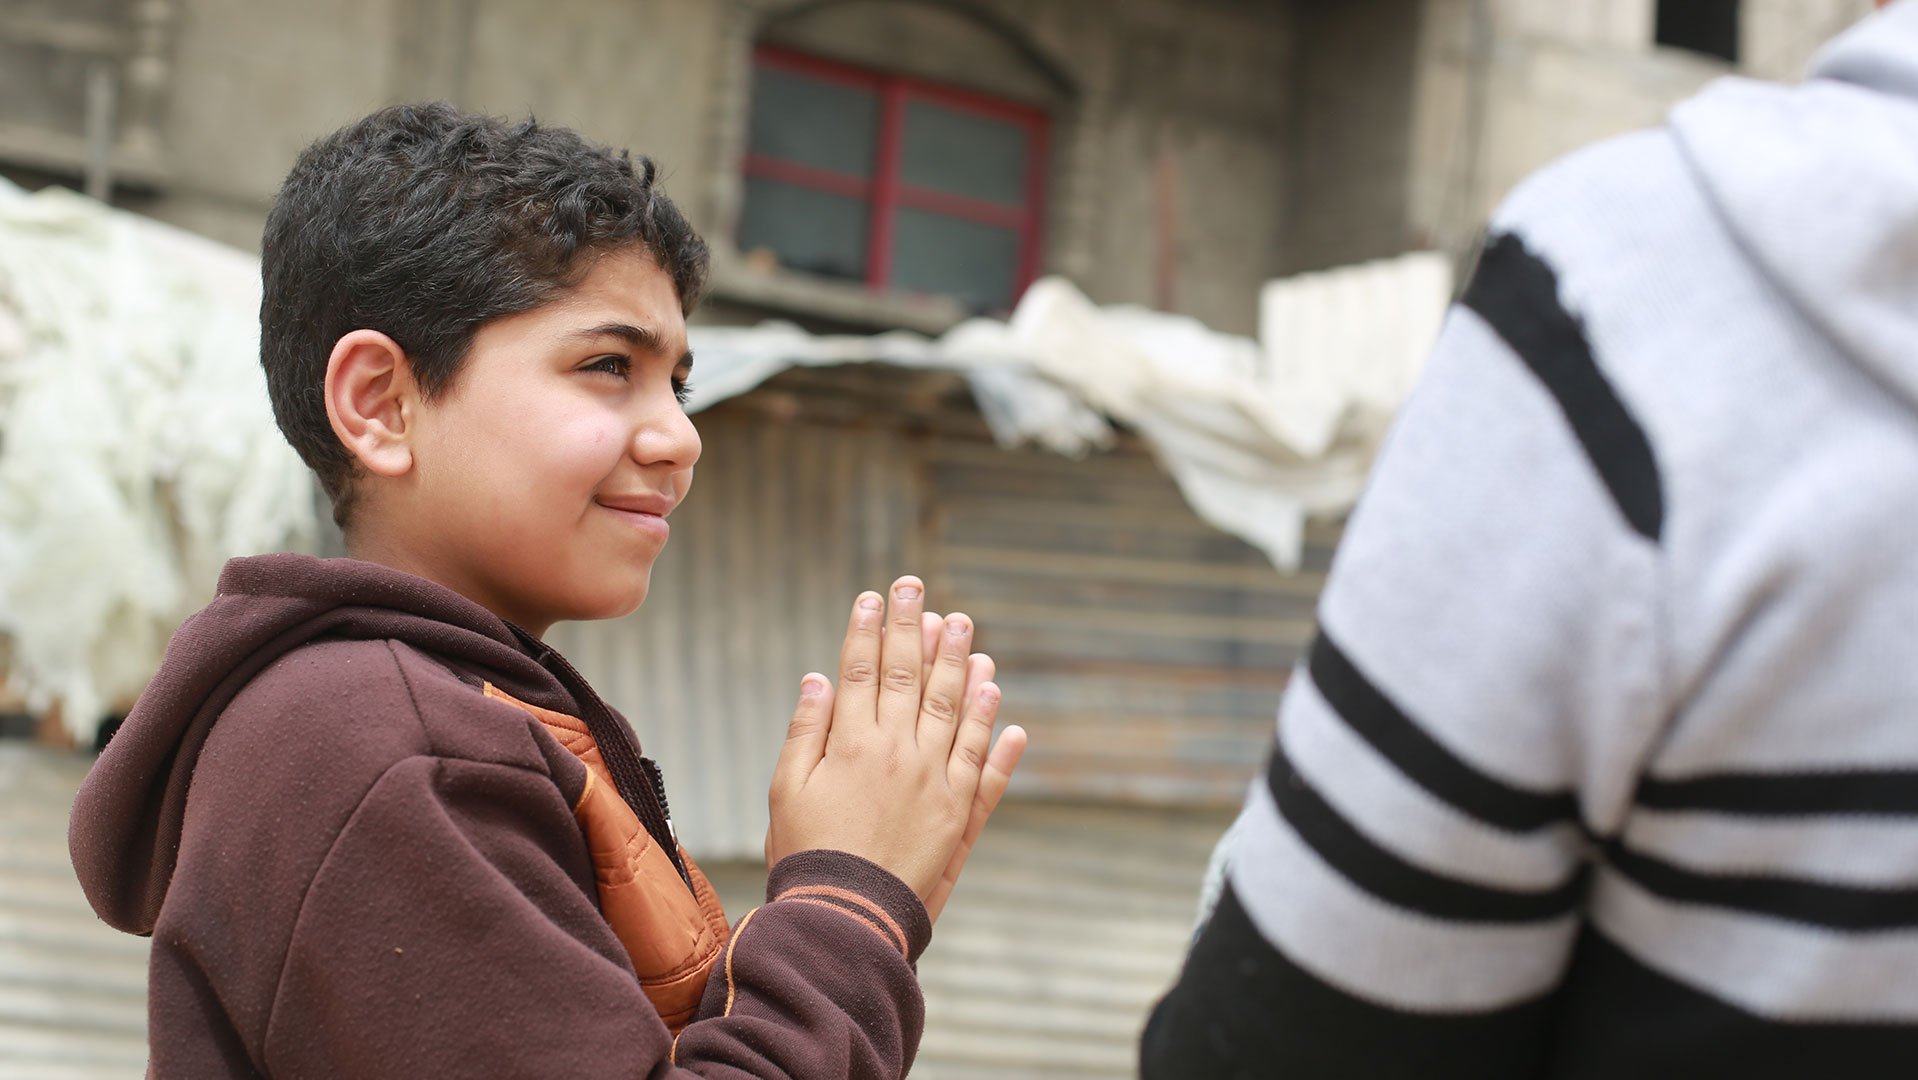 Rami in de bezette Palestijnse gebieden - War Child programma